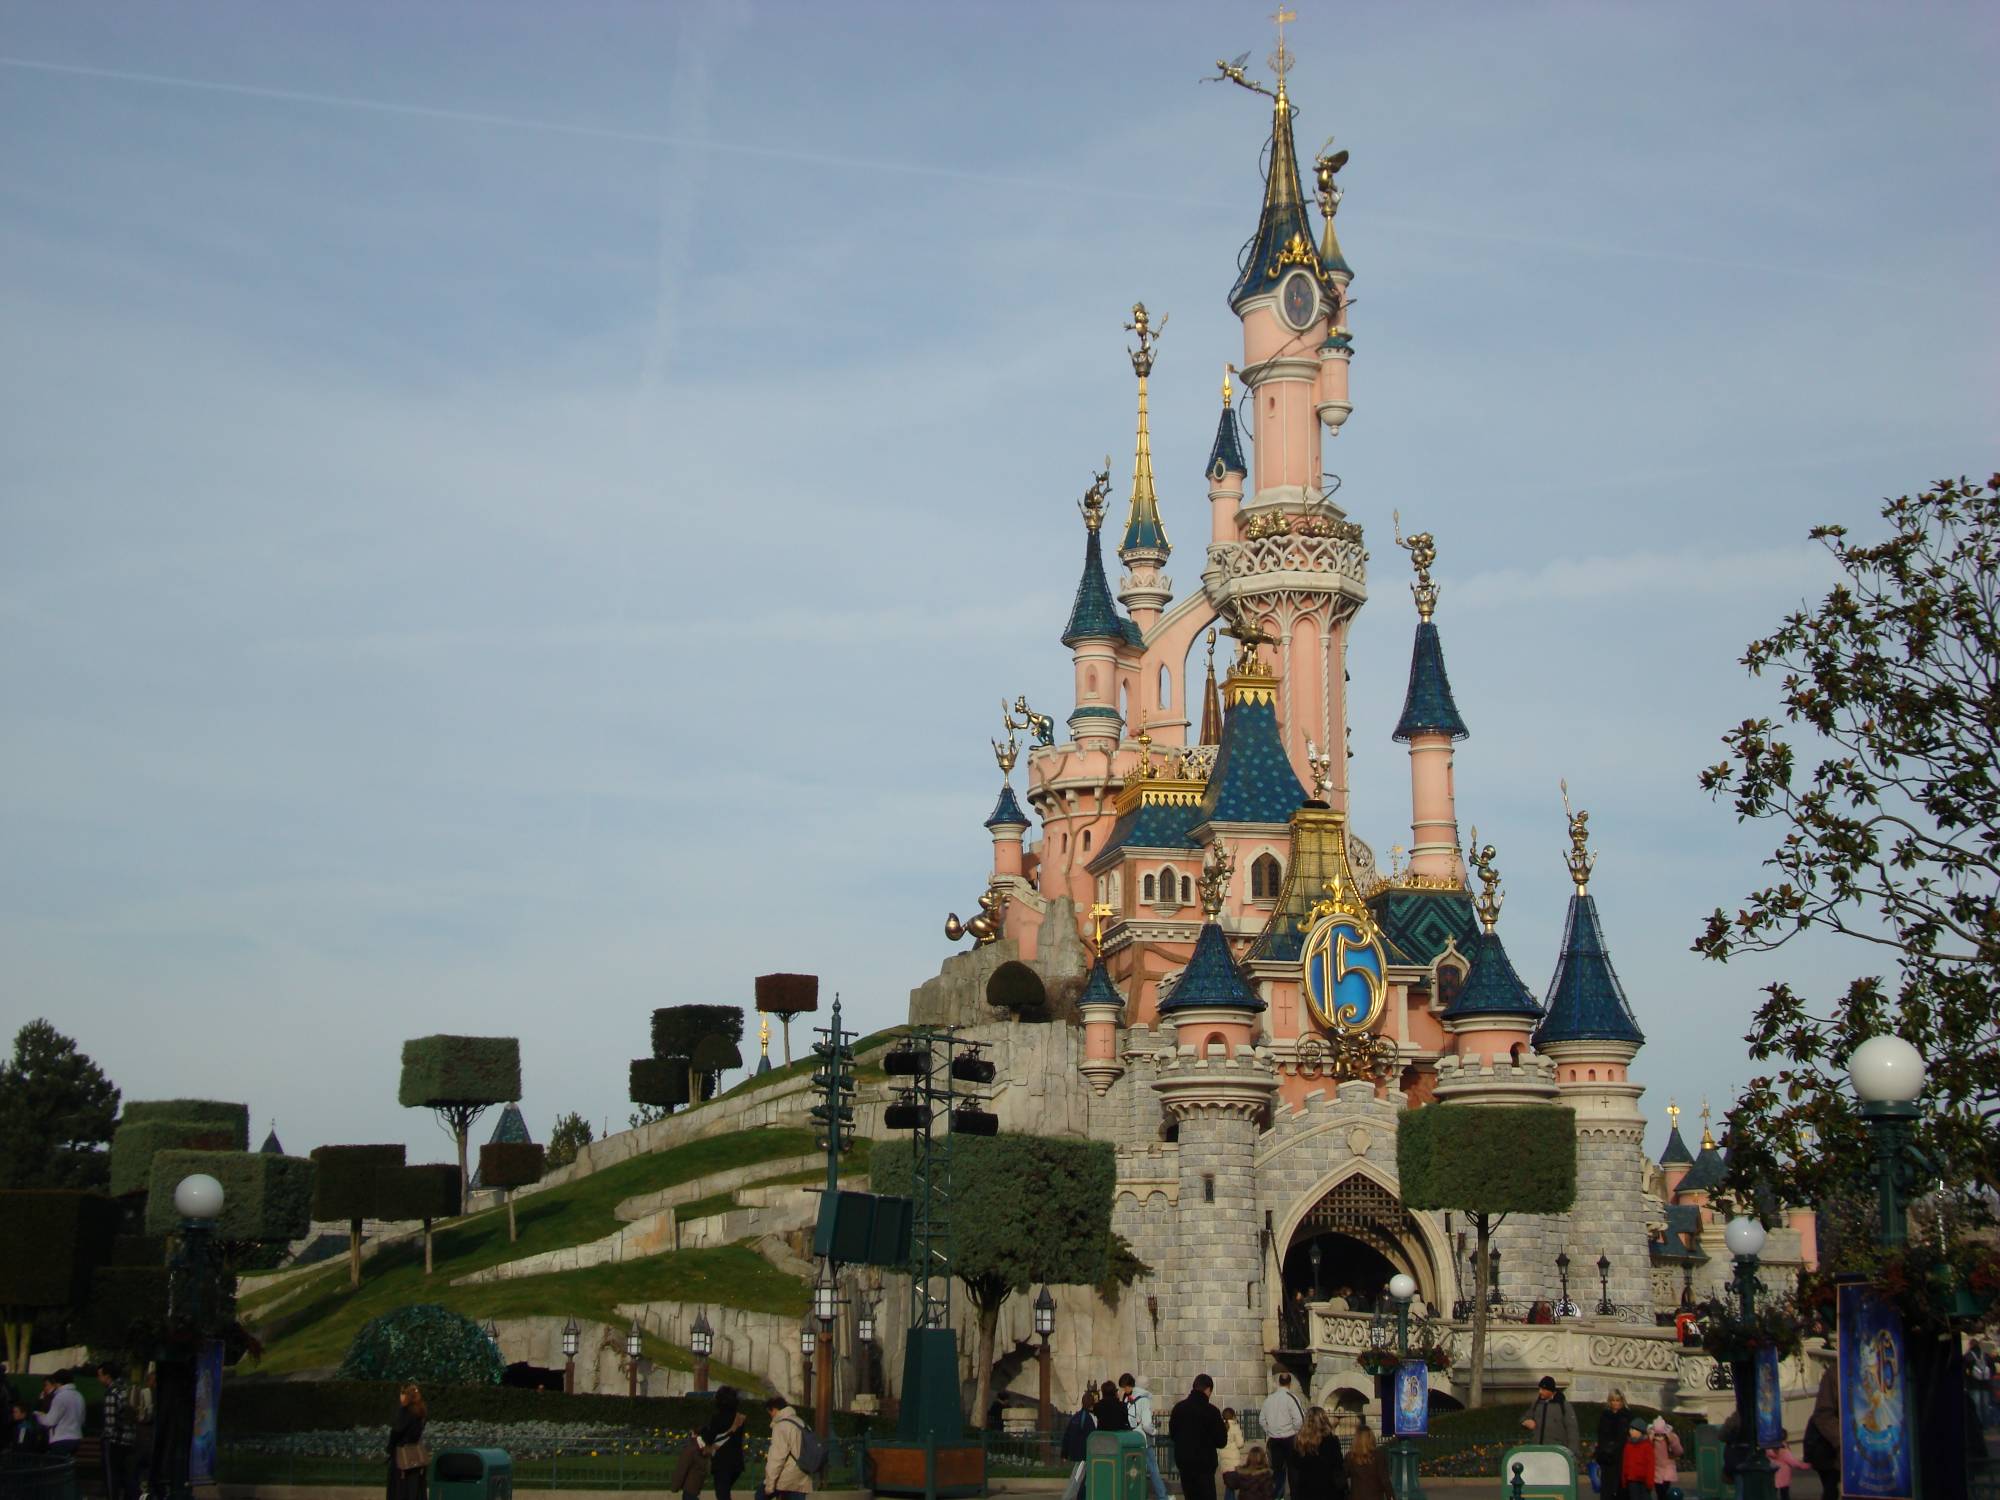 Disneyland Paris - Sleeping Beauty Castle